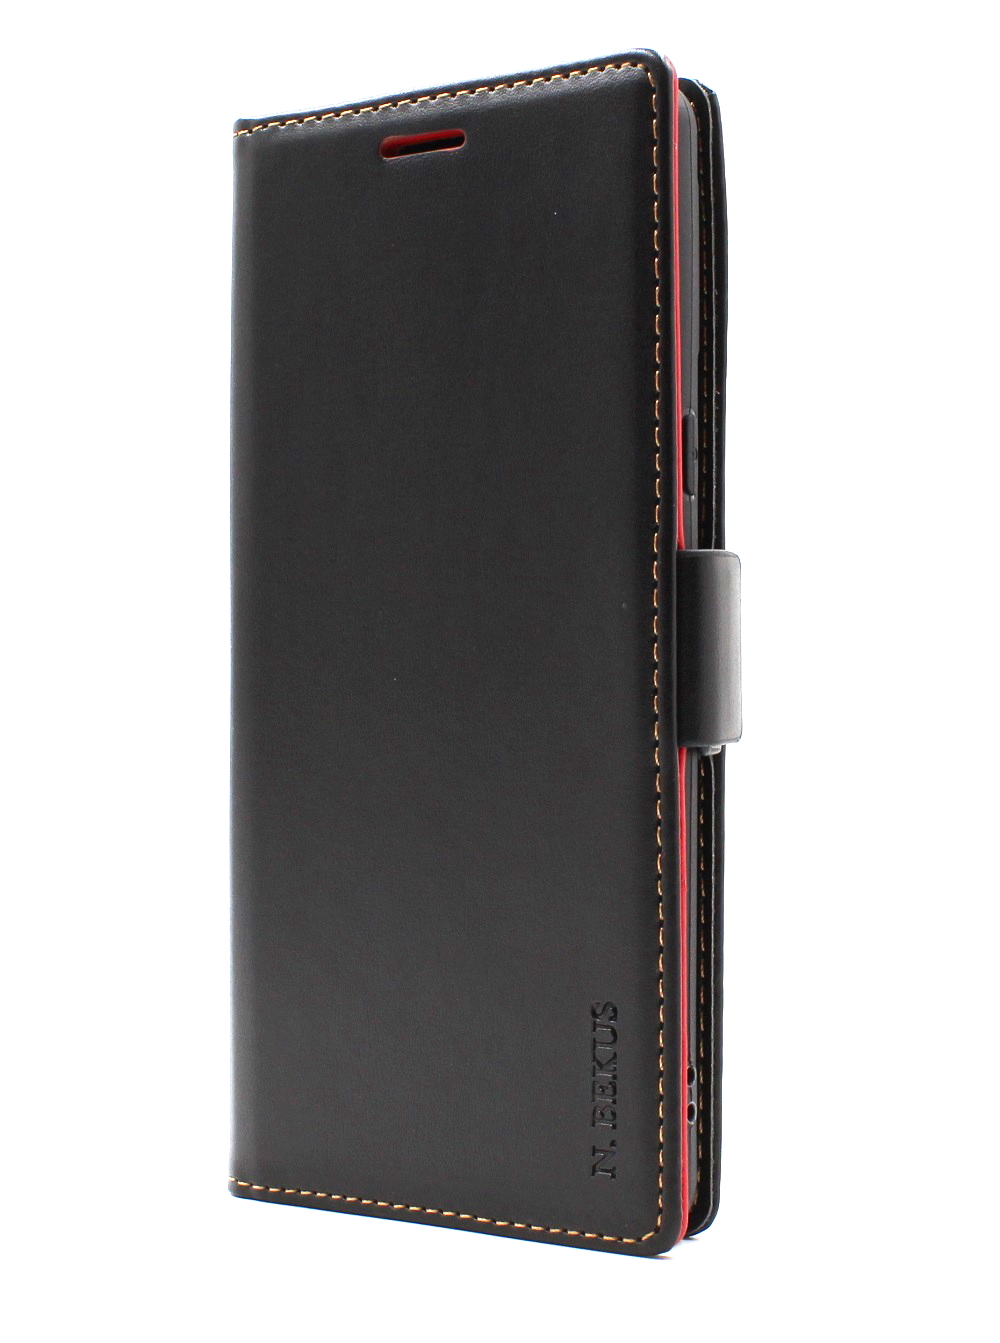 billigamobilskydd.seLyx Standcase Wallet Xiaomi 13 5G